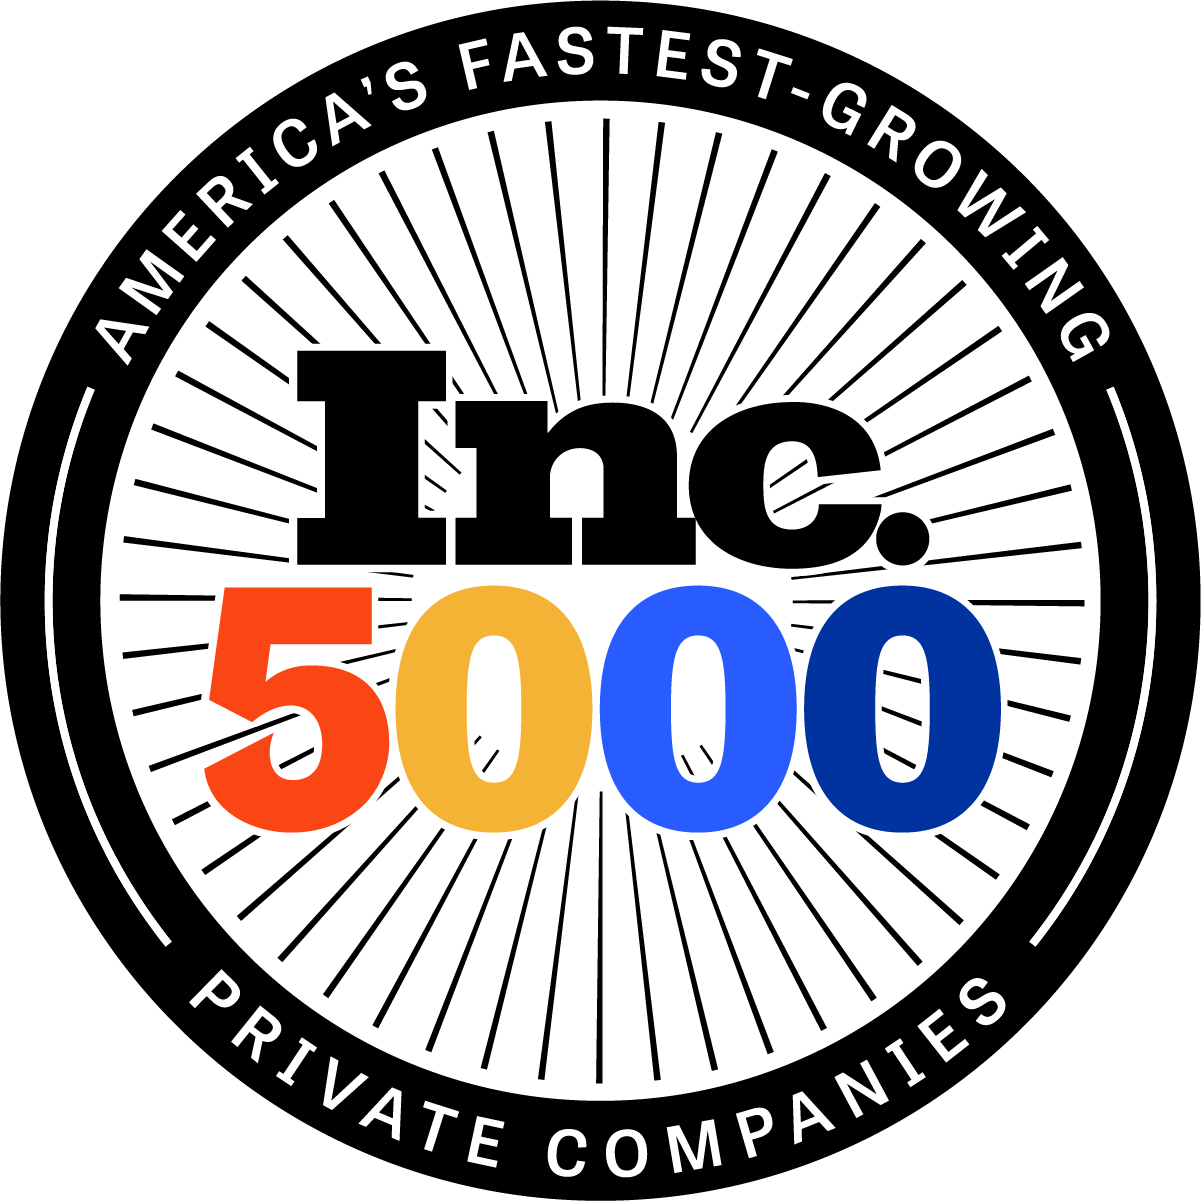 RFPIO Makes Inc. Magazine’s Inc. 5000 List, Ranking in Top 5%